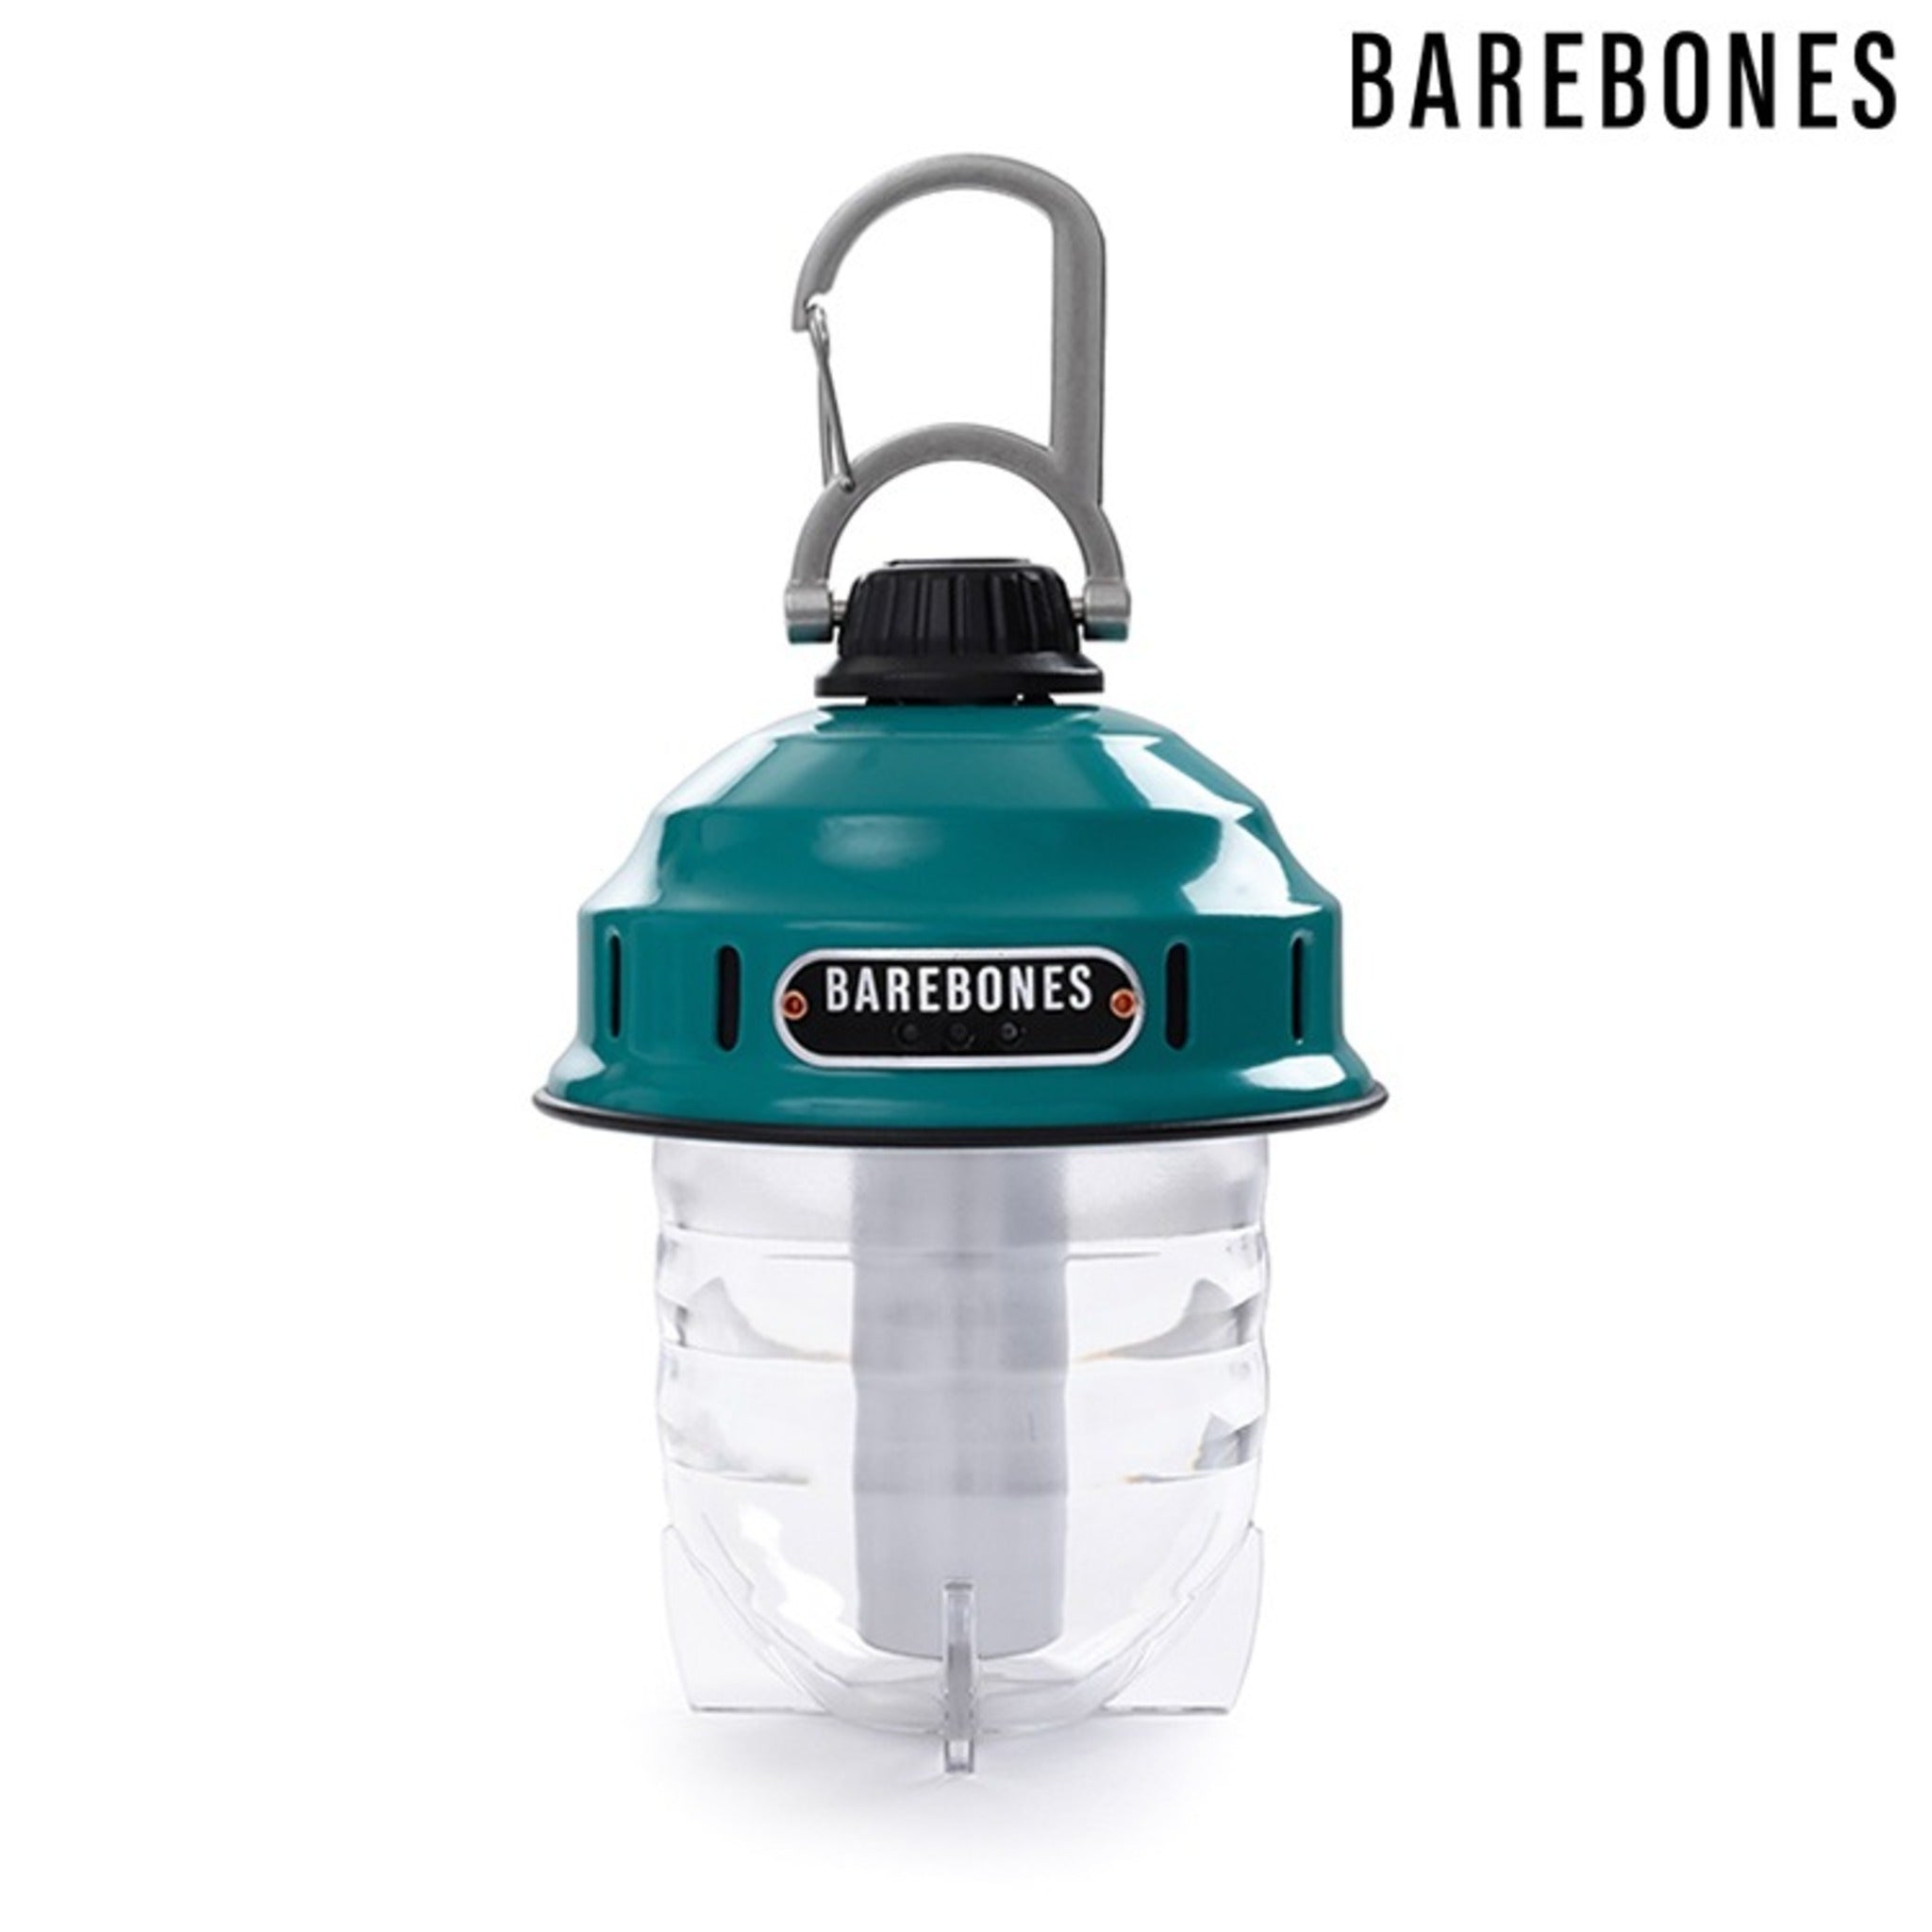 【Barebones】吊掛式營燈Beacon 藍綠色 LIV-236